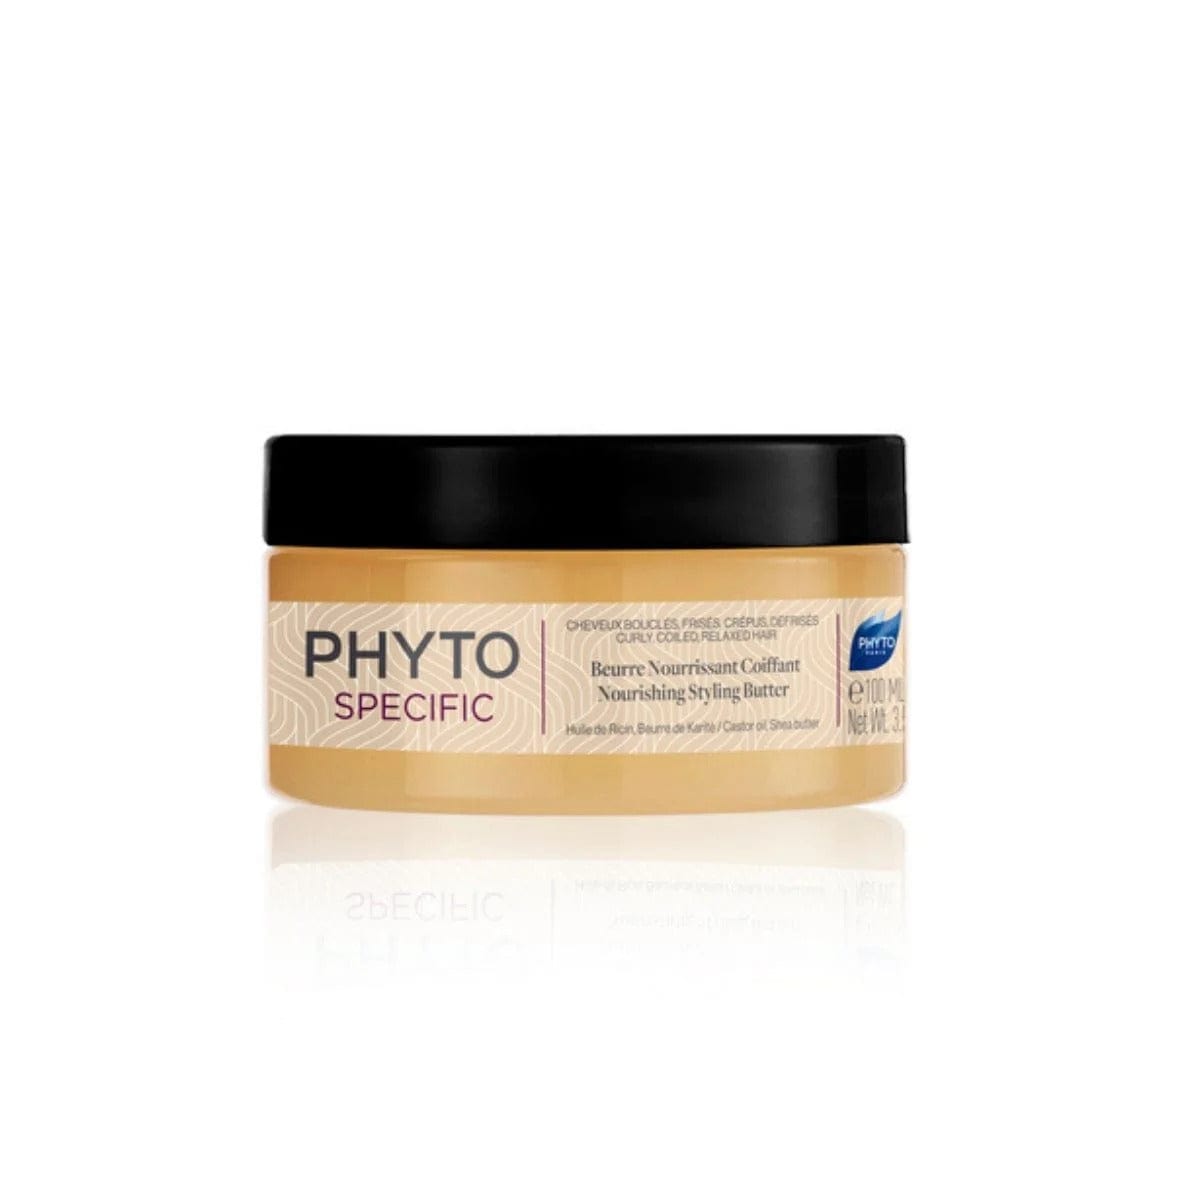 PHYTO Soins & Beauté Phytospecific (beurre nourrisant coiffant) 100ml